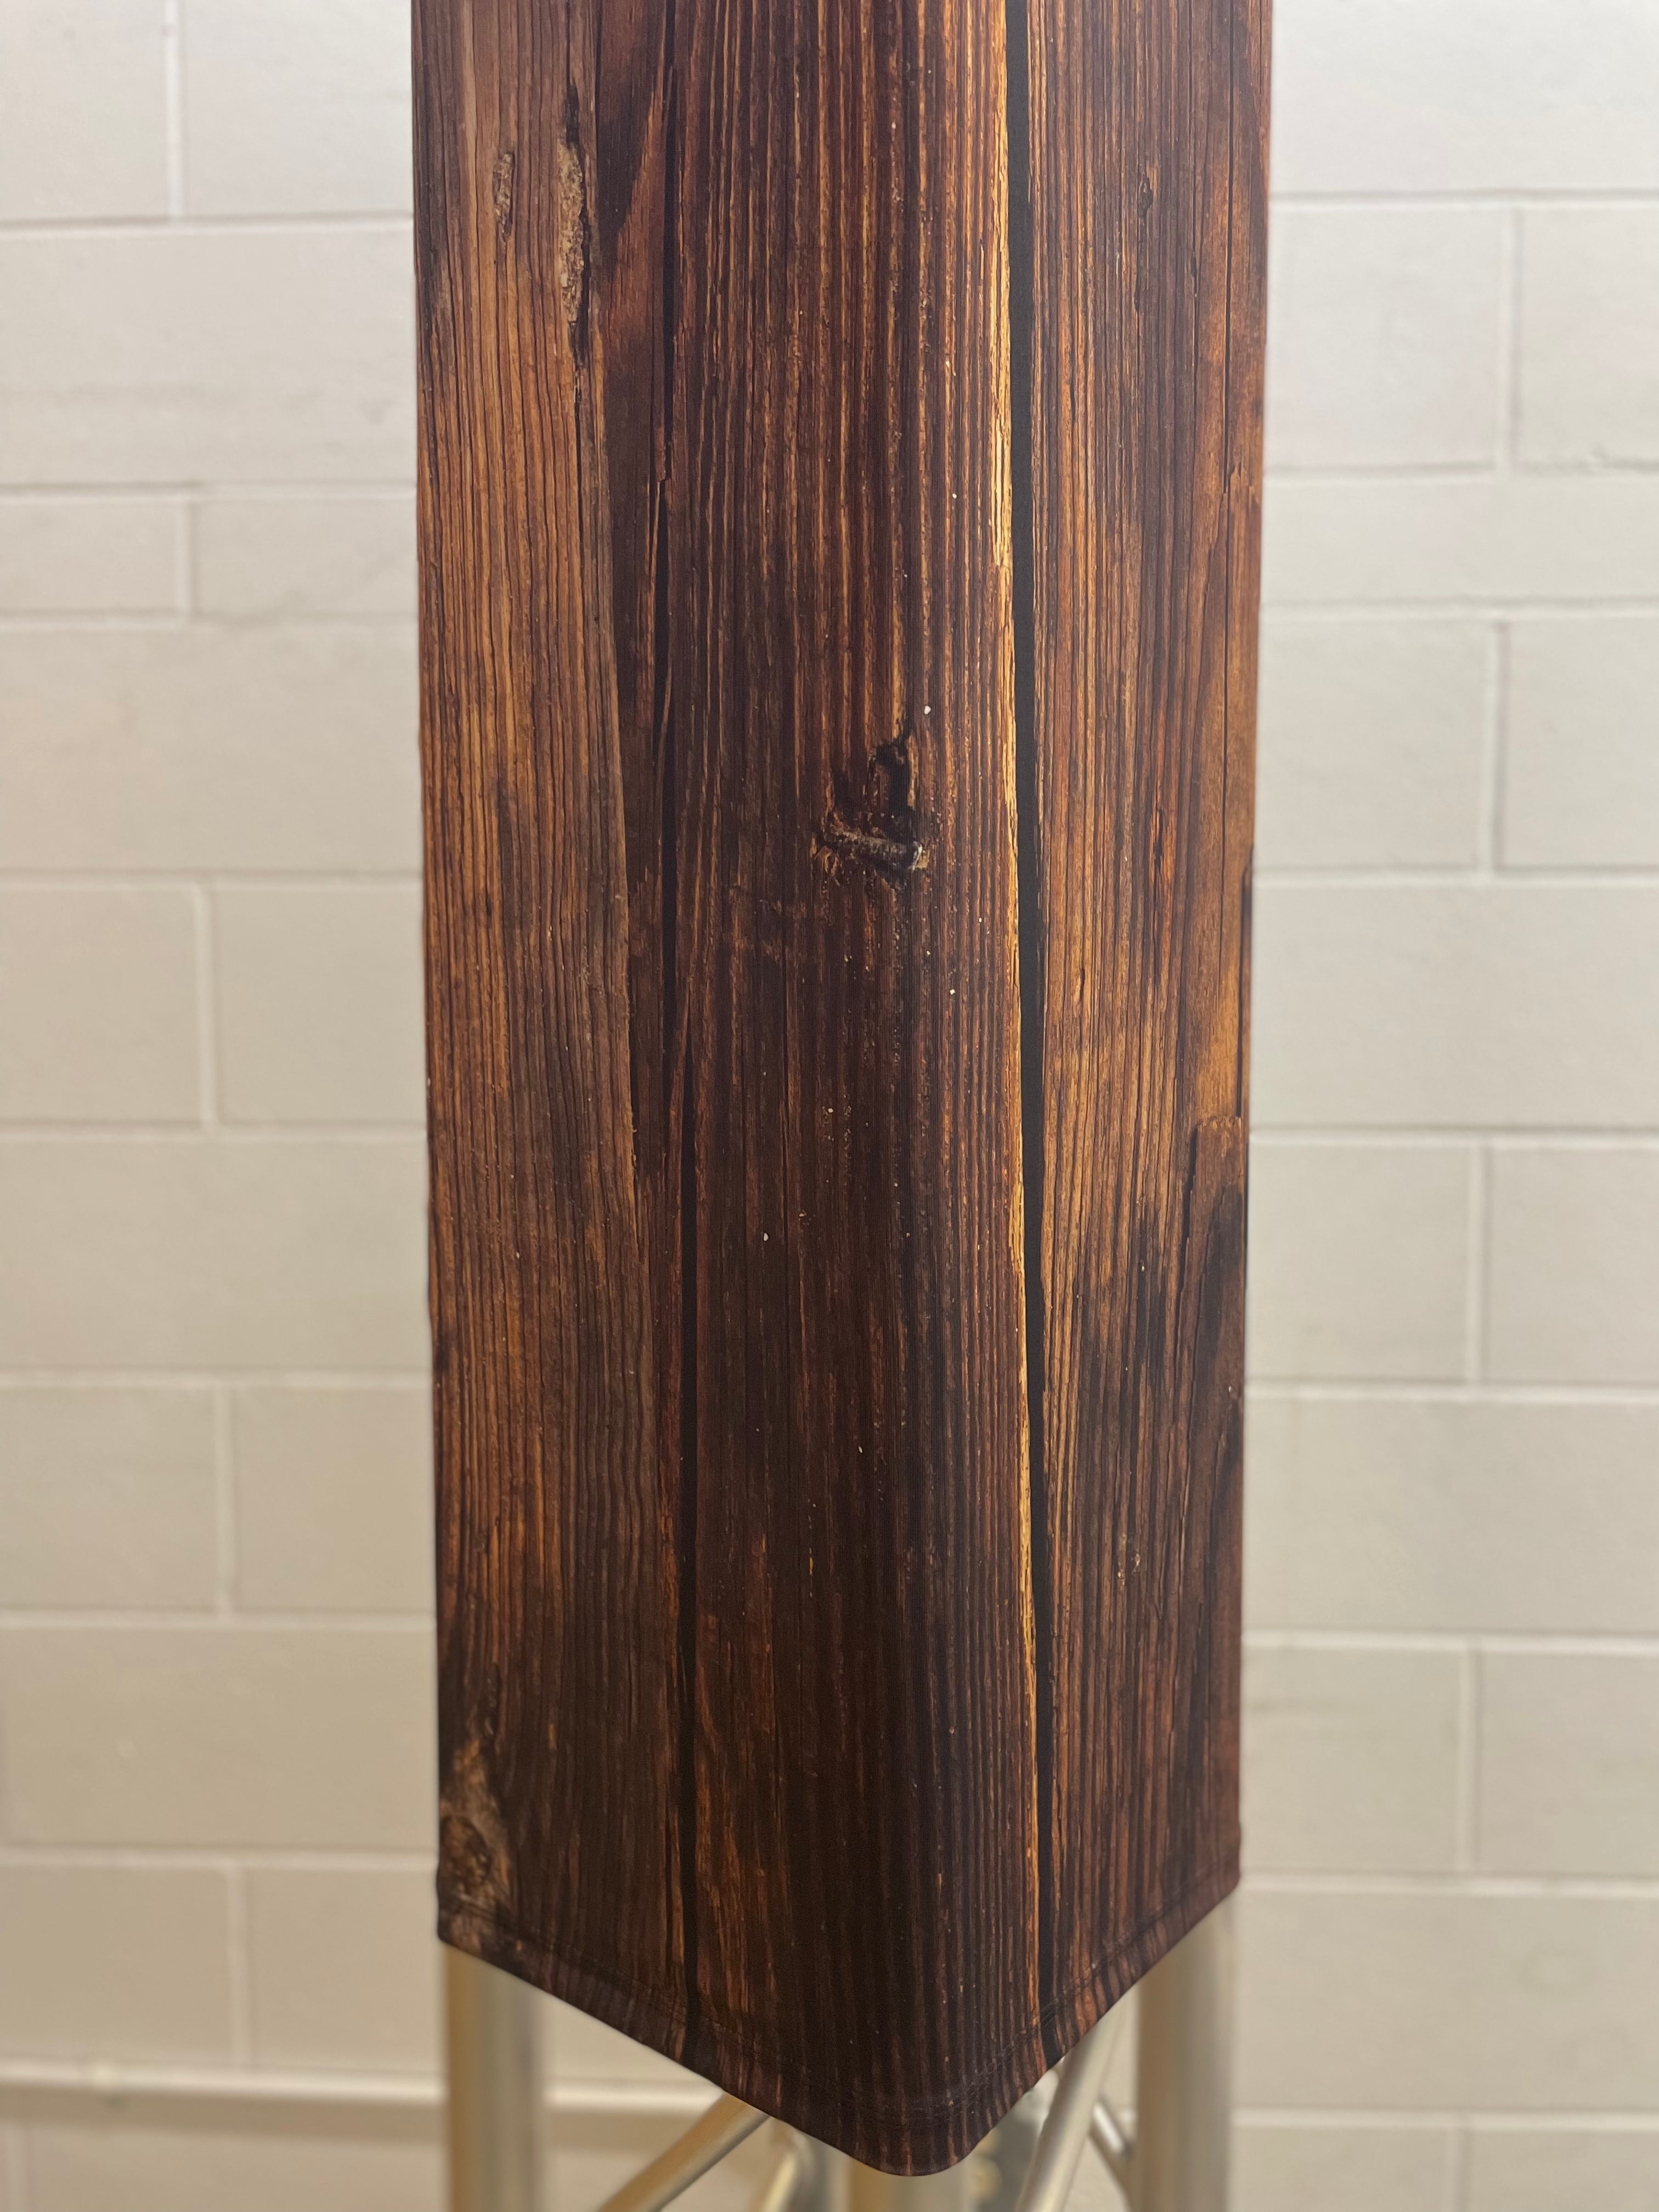 Wood Plank Printed Truss Covers - 12"x12" Box Truss